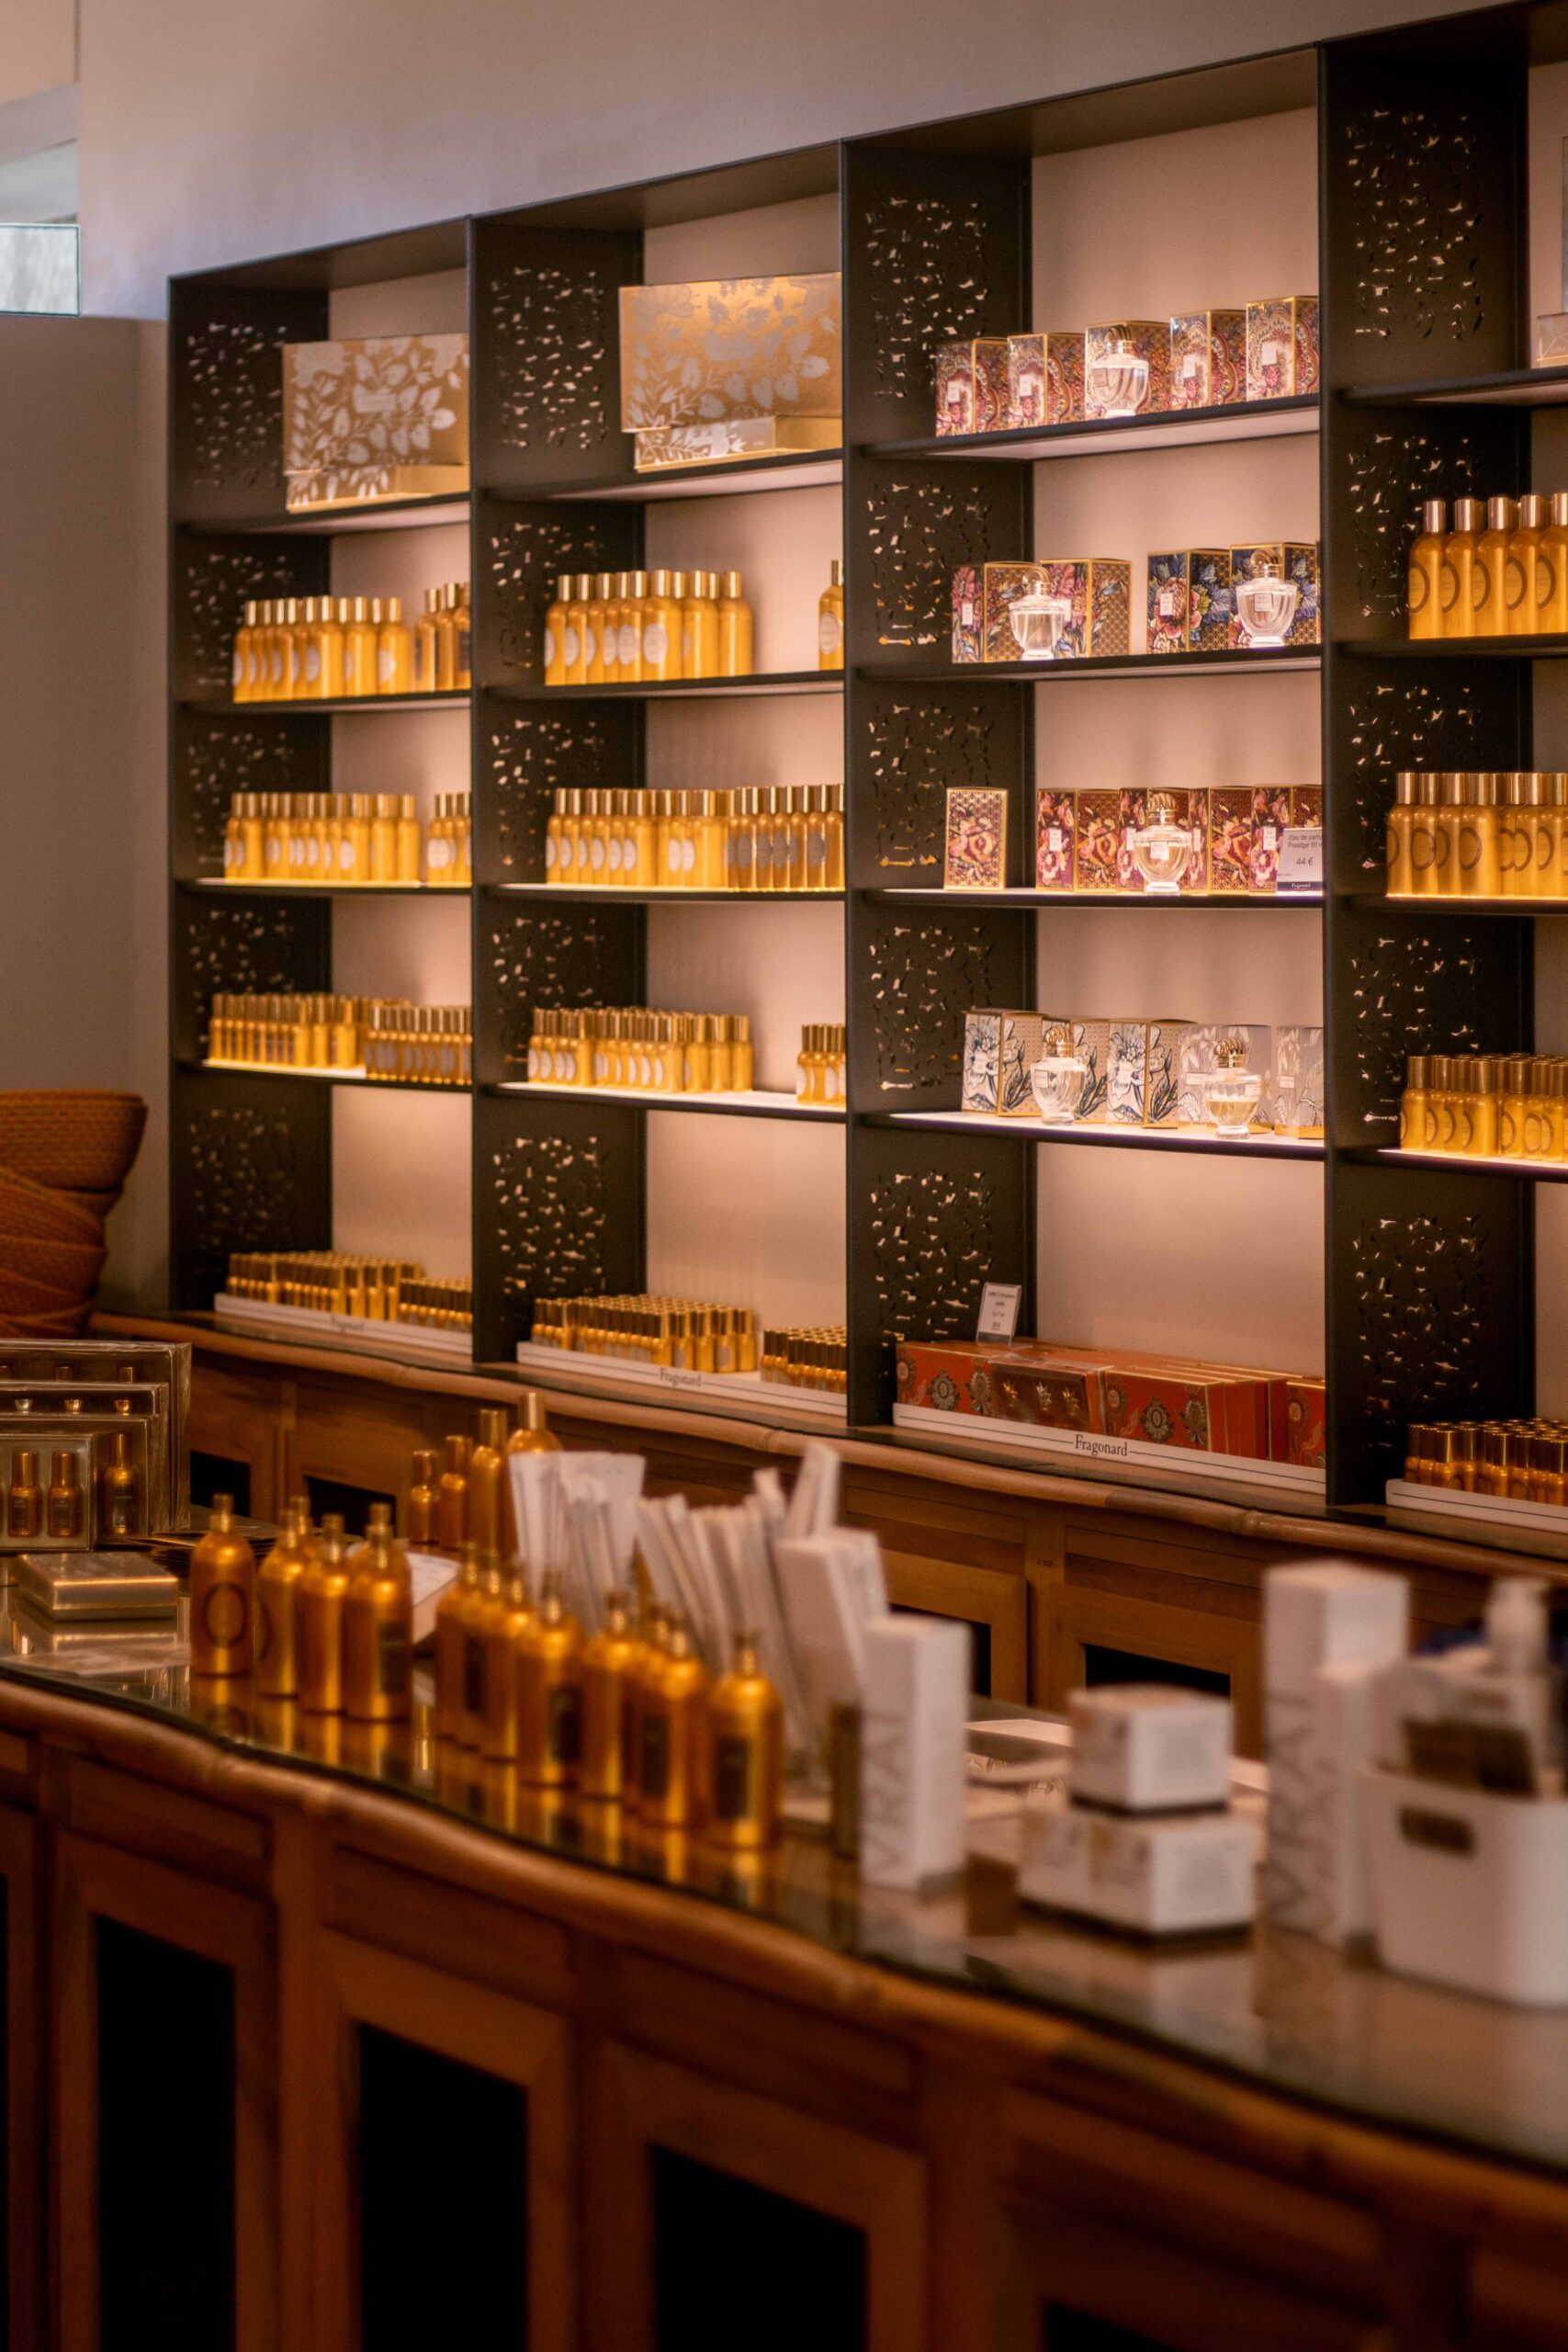 Shelves and displays of perfume bottles in the Fragonard shop in Eze Village, France